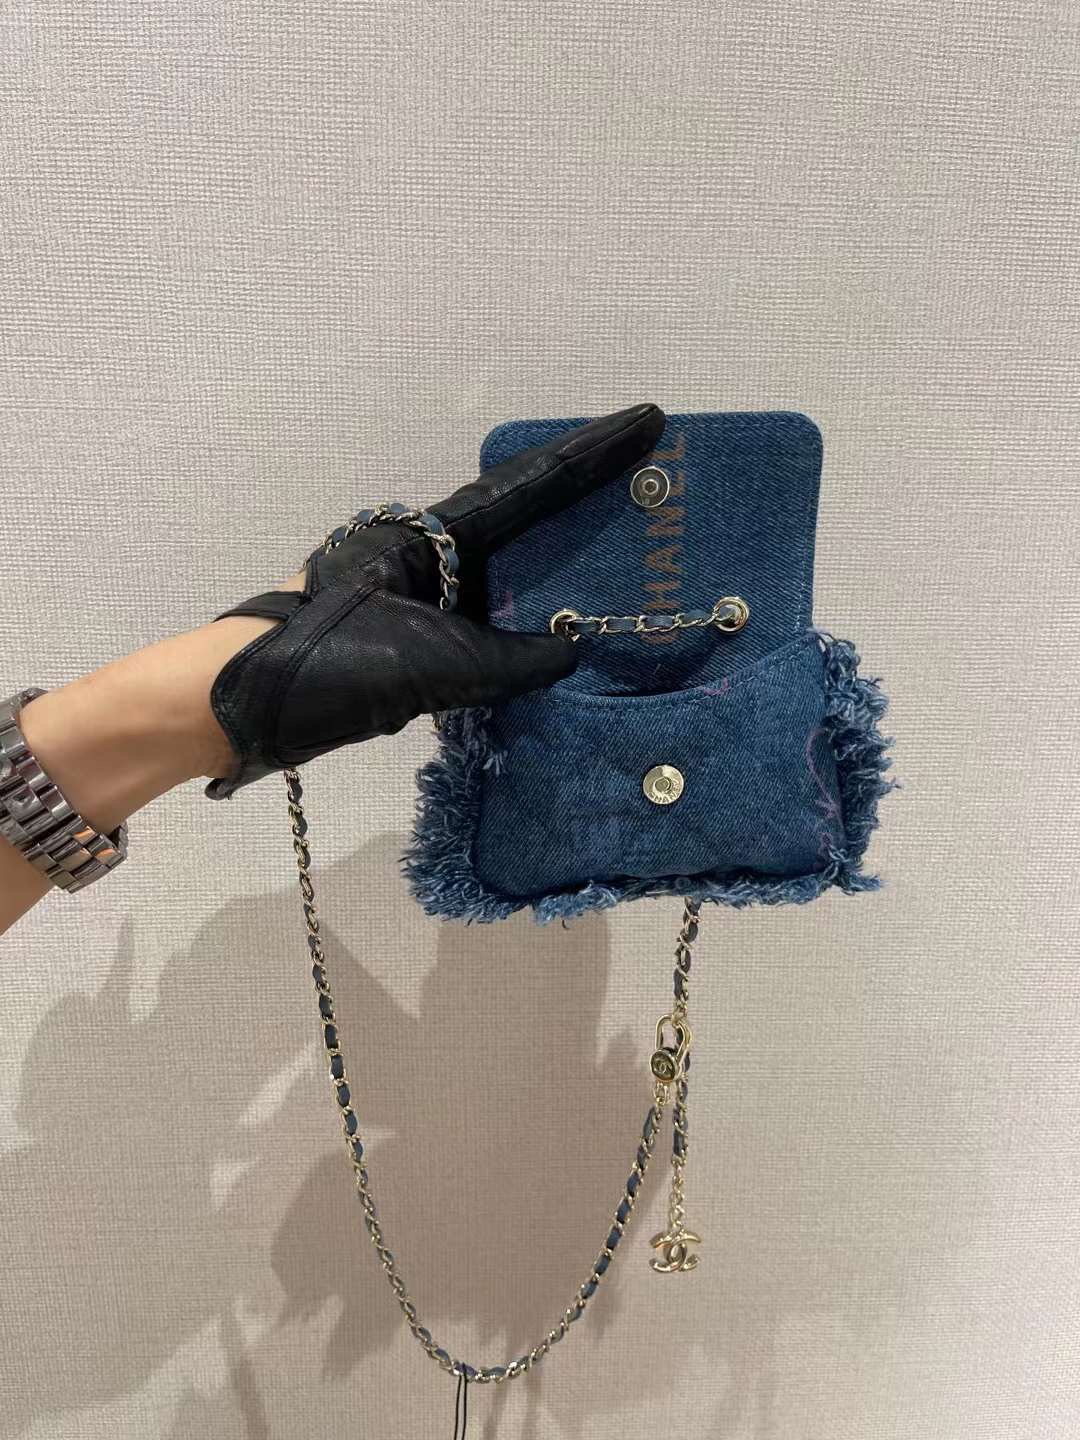 【P720】Chanel包包价格 香奈儿蓝色牛仔布涂鸦链条单肩斜挎包